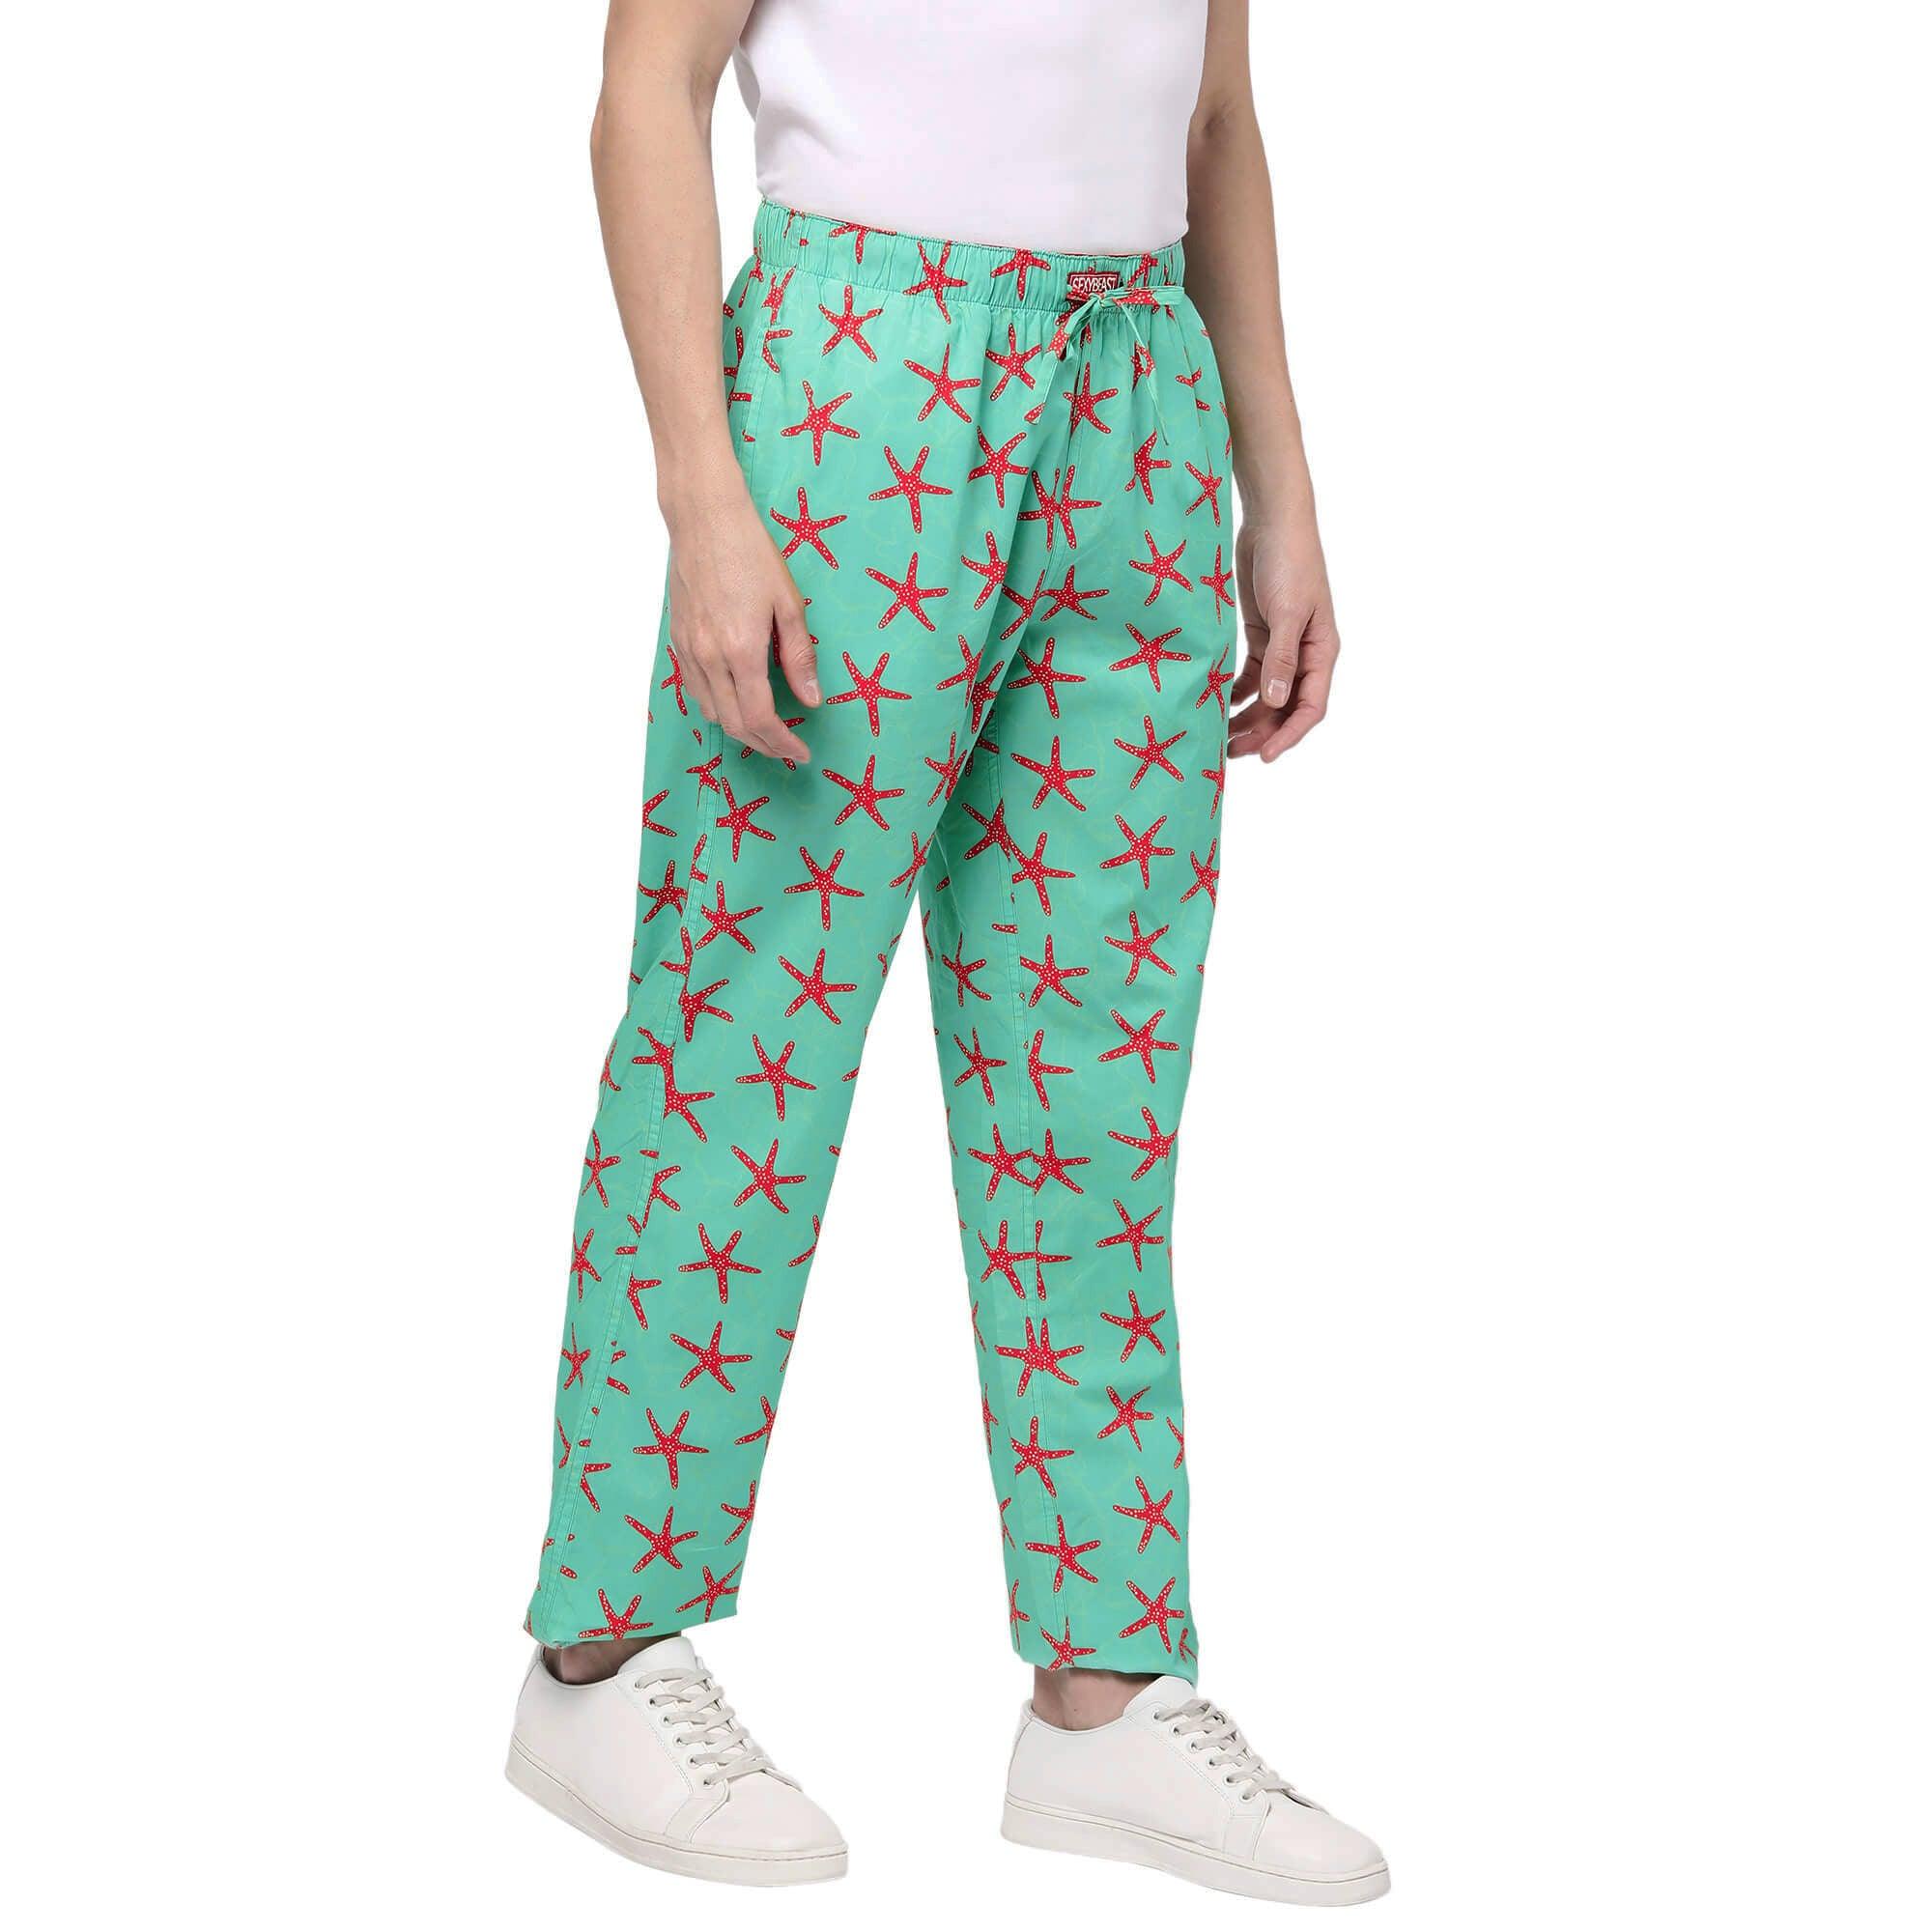 Green Starfish Pyjamas For Men